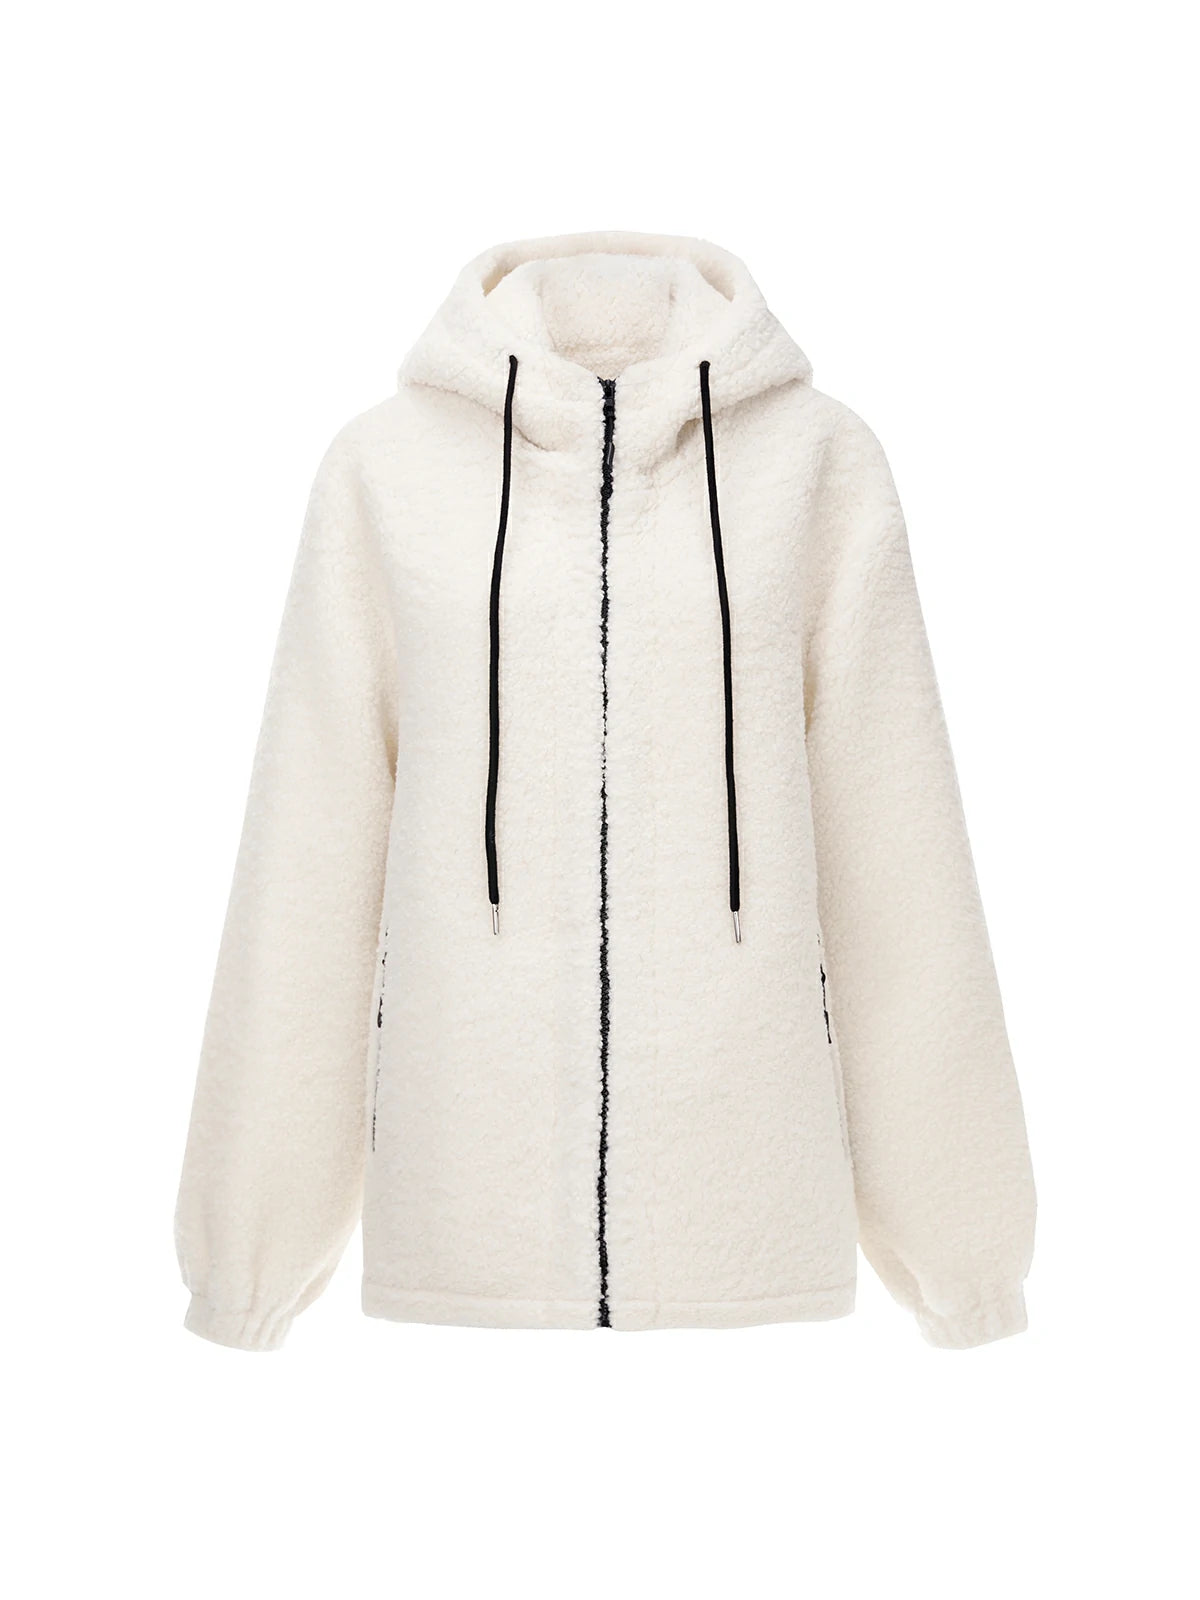 Cozy and Stylish: Beige Fleece Jacket with Zip Details